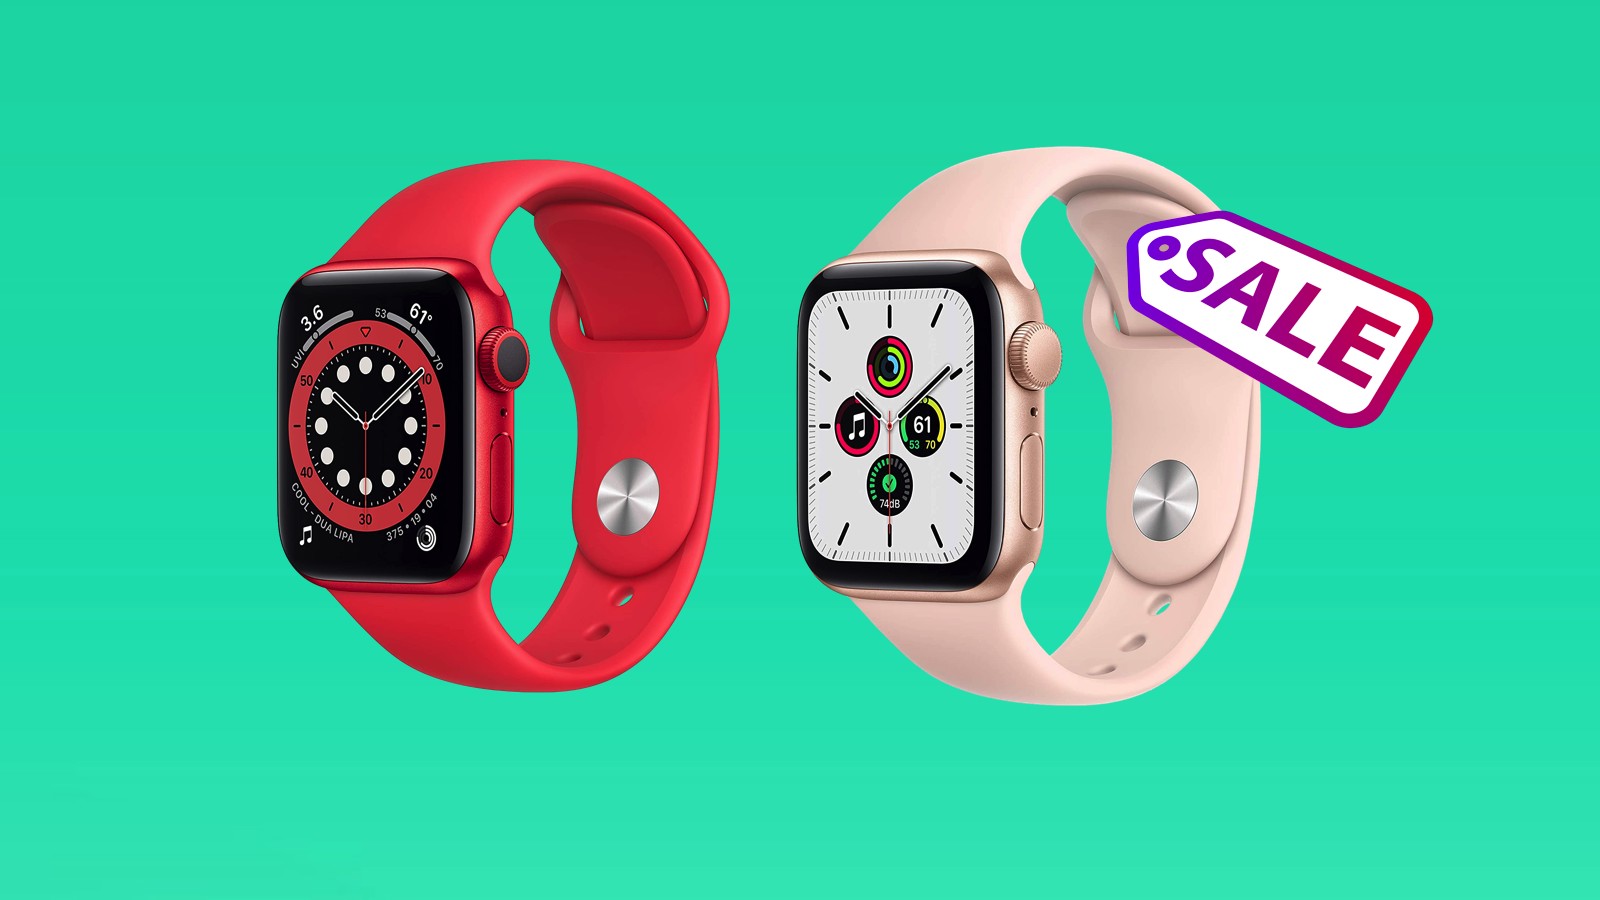 apple watch deals